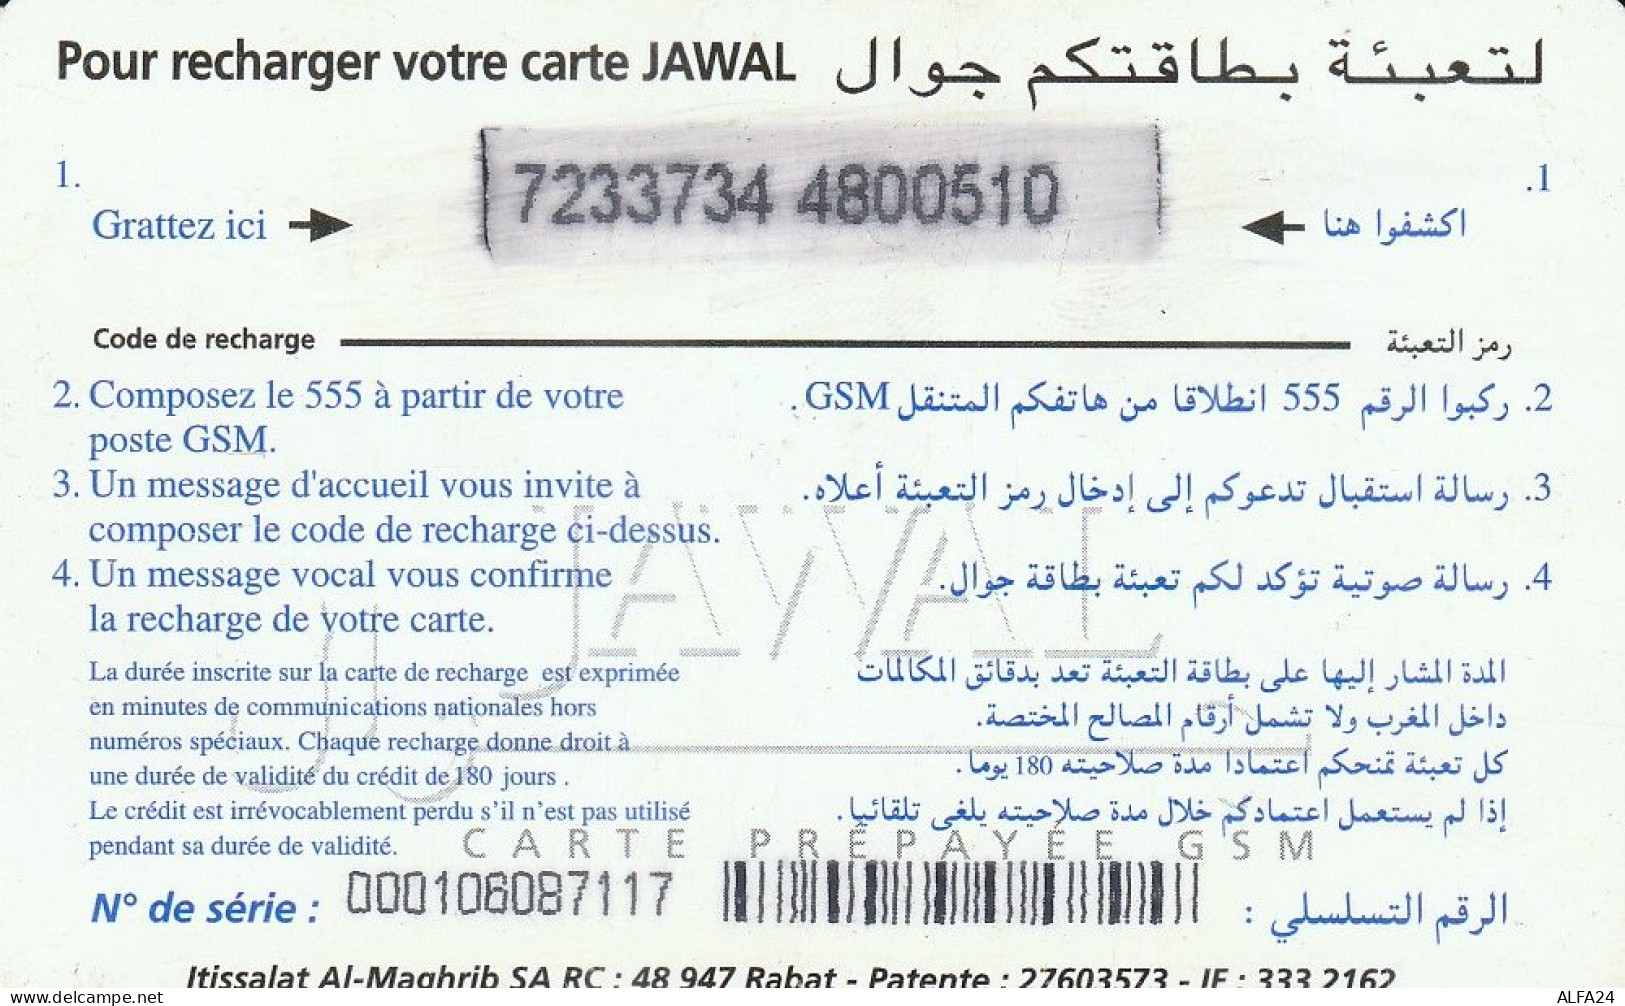 PREPAID PHONE CARD MAROCCO  (CZ2450 - Maroc